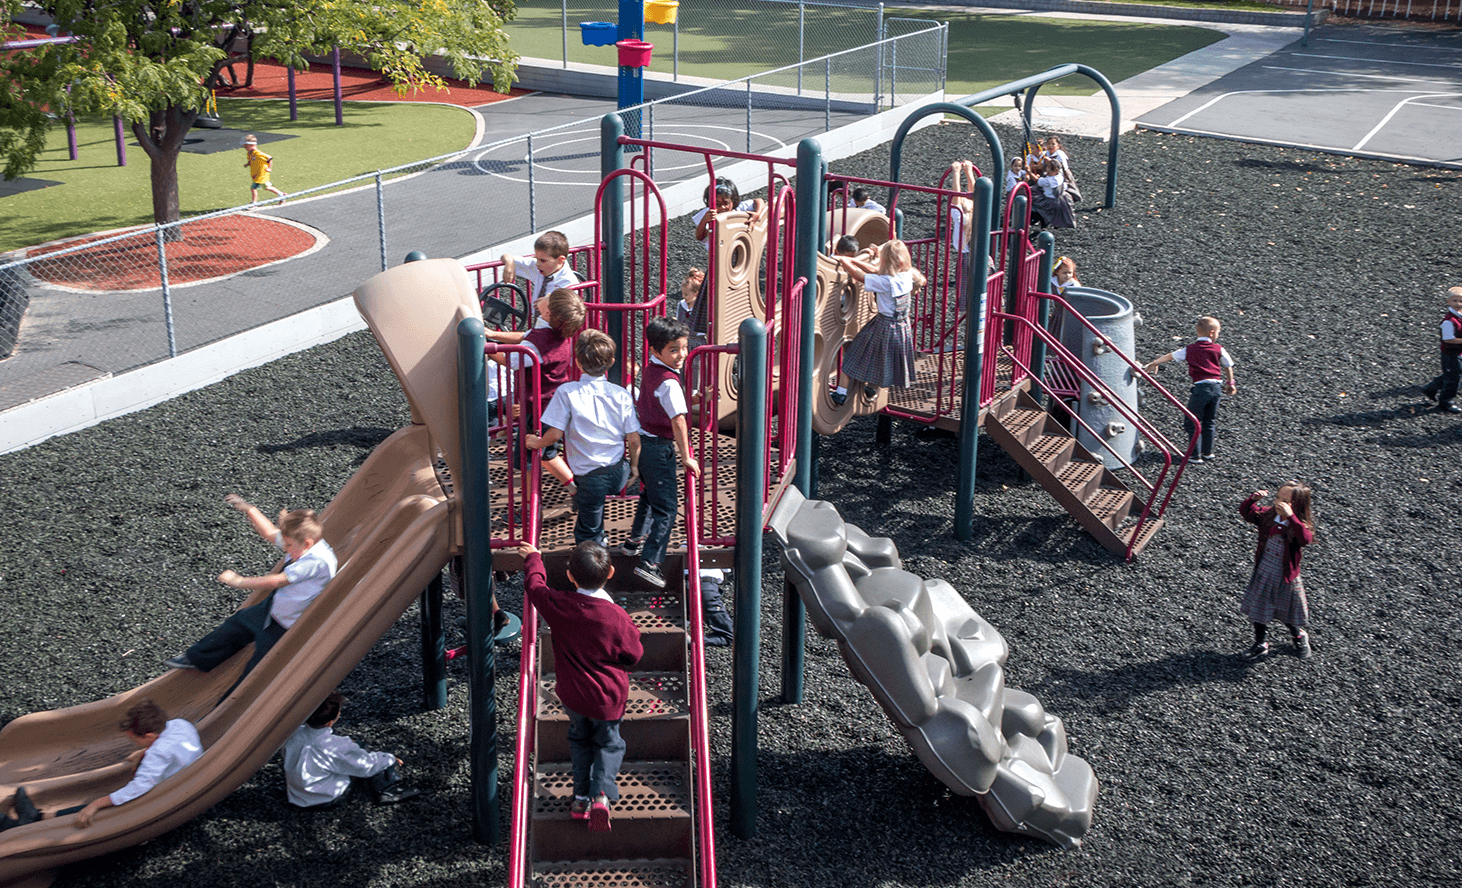 Playground | Challenger School - Sandy | Private School In Sandy, Utah